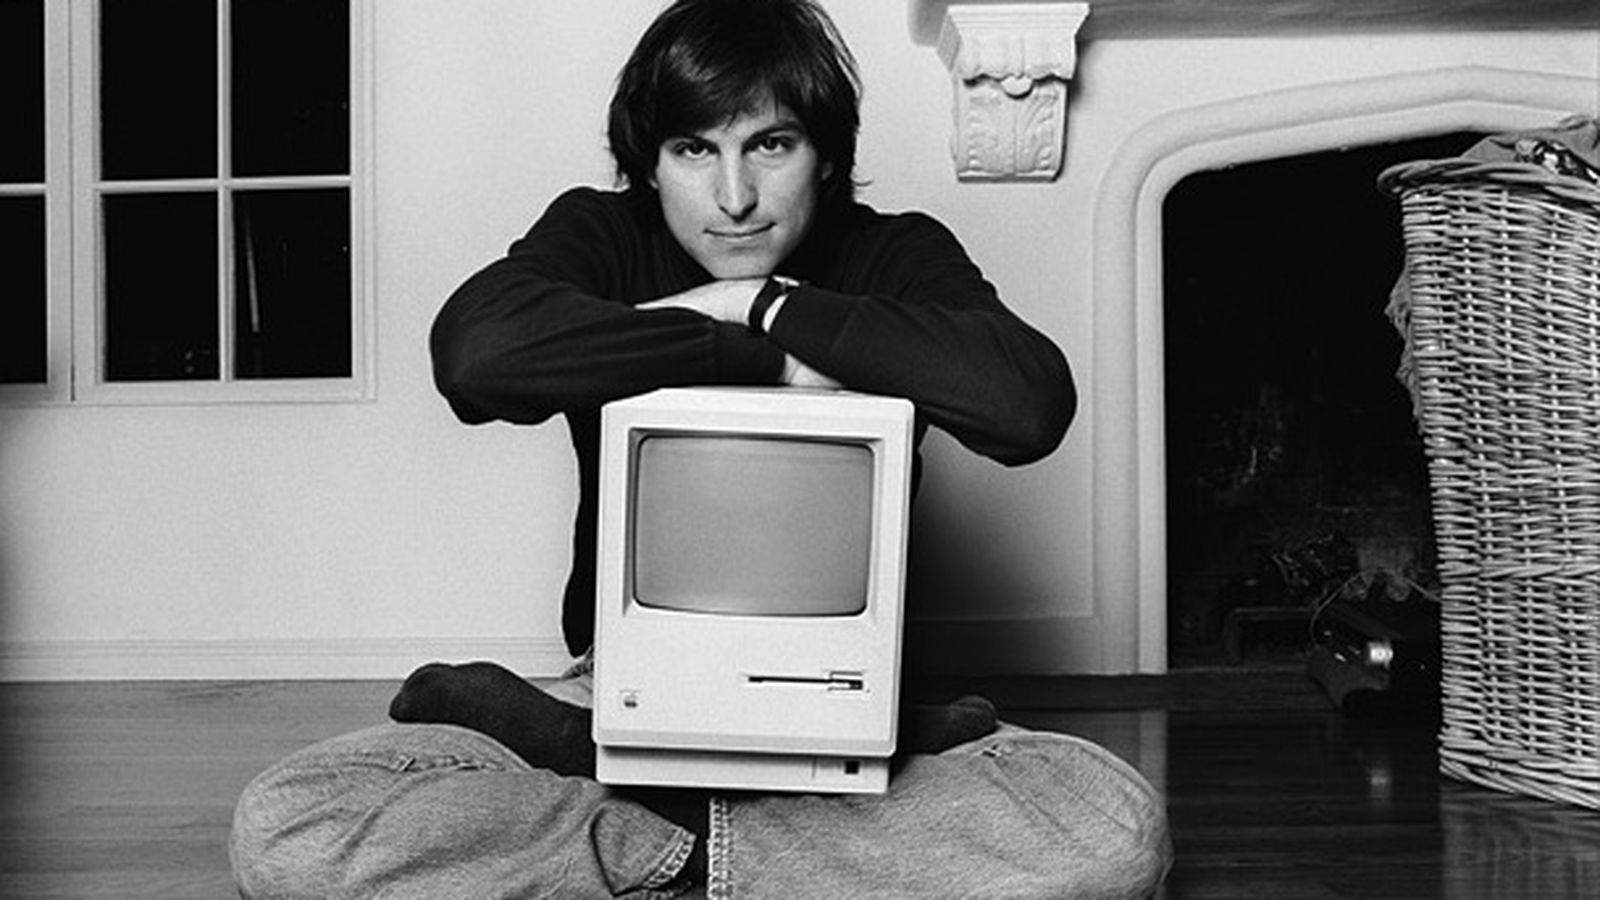 Steve Jobs with his Macintosh